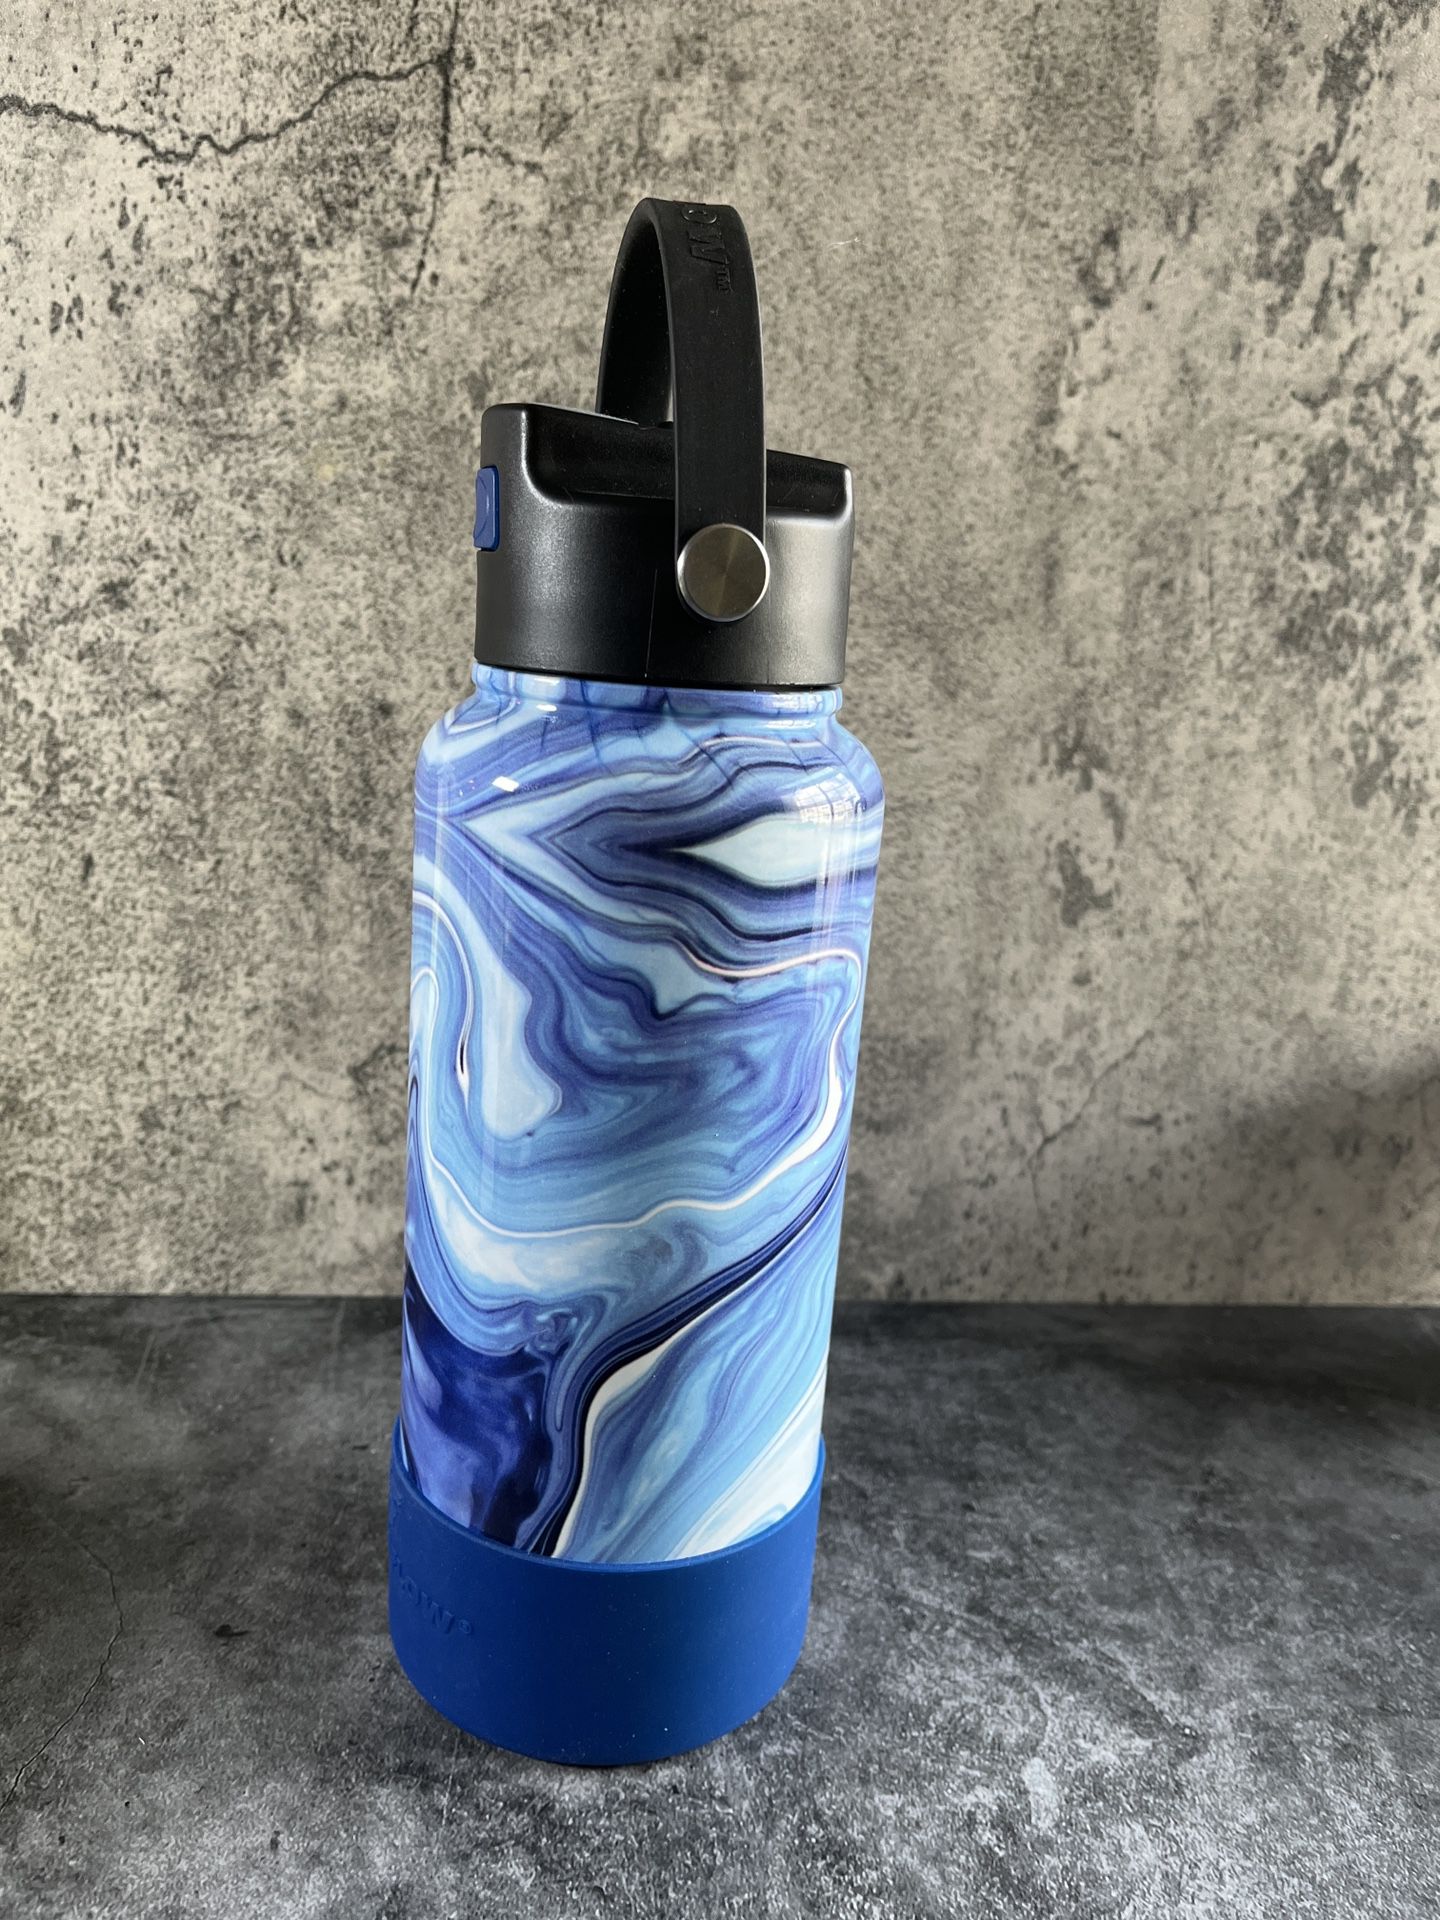 Hydrapeak Voyager Bottle for Sale in Stamford, CT - OfferUp